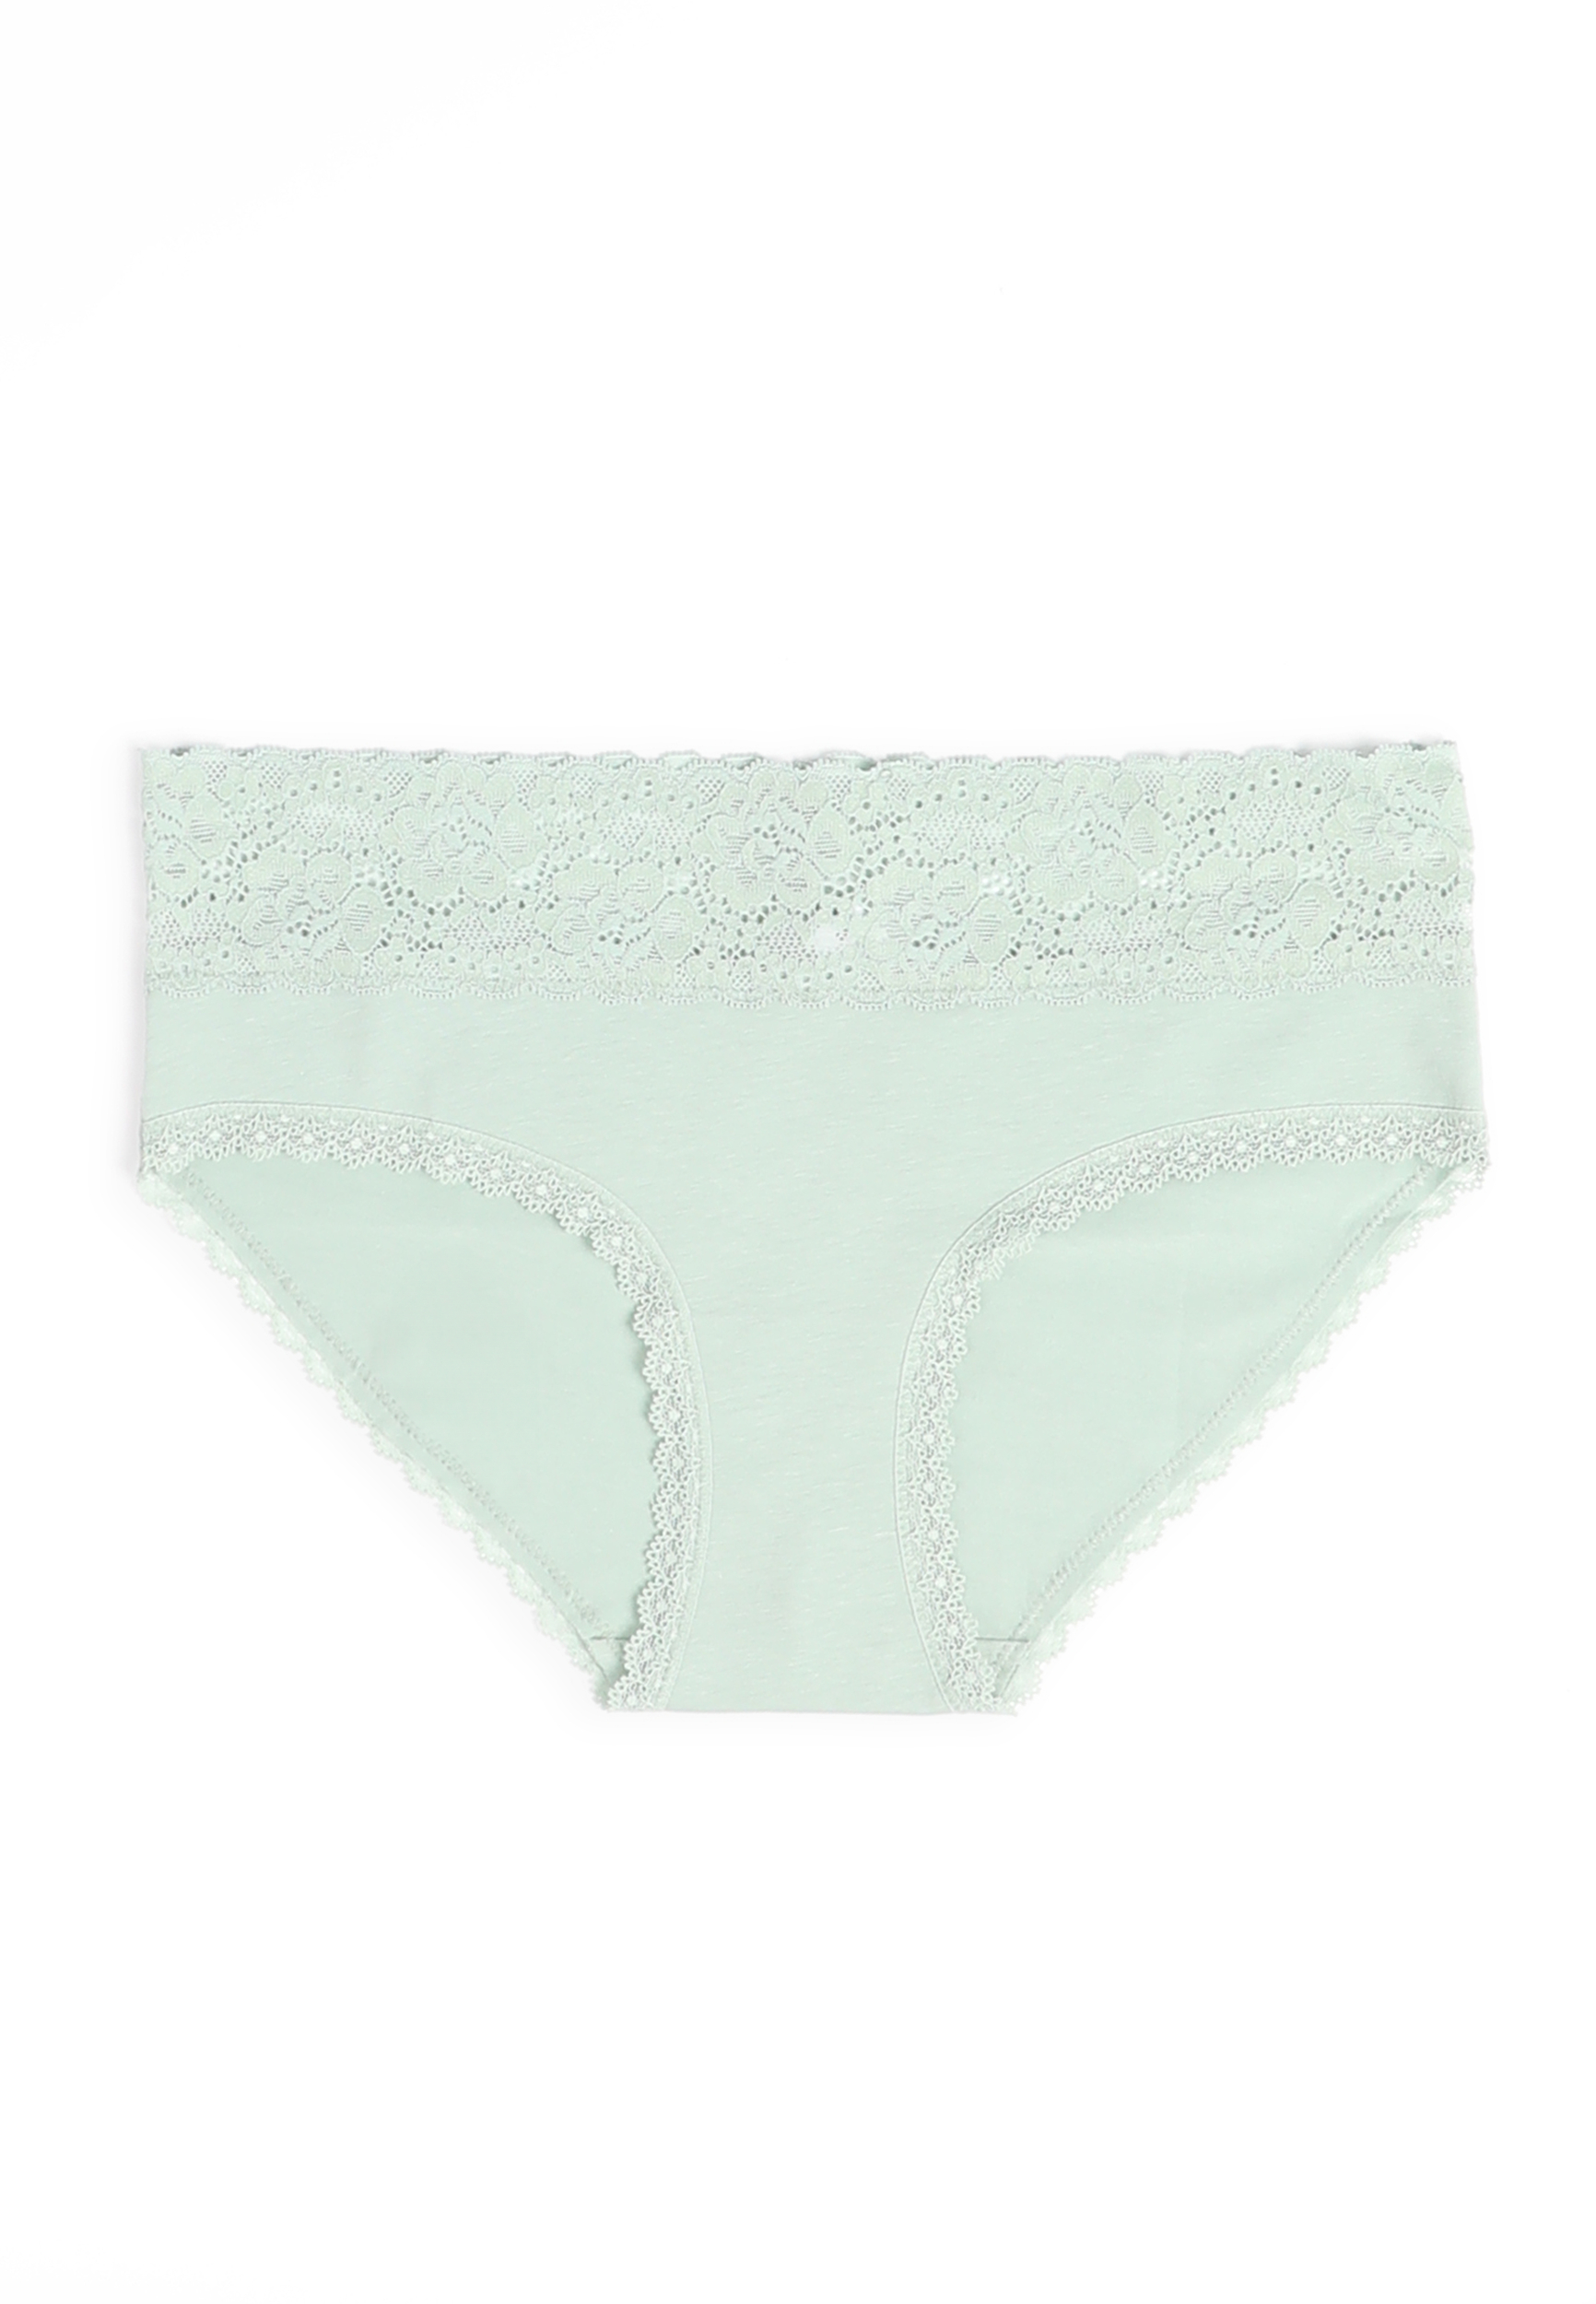 Undies.com Women's Microfiber Hipster with Lace 6 Piece Underwear -  ShopStyle Panties